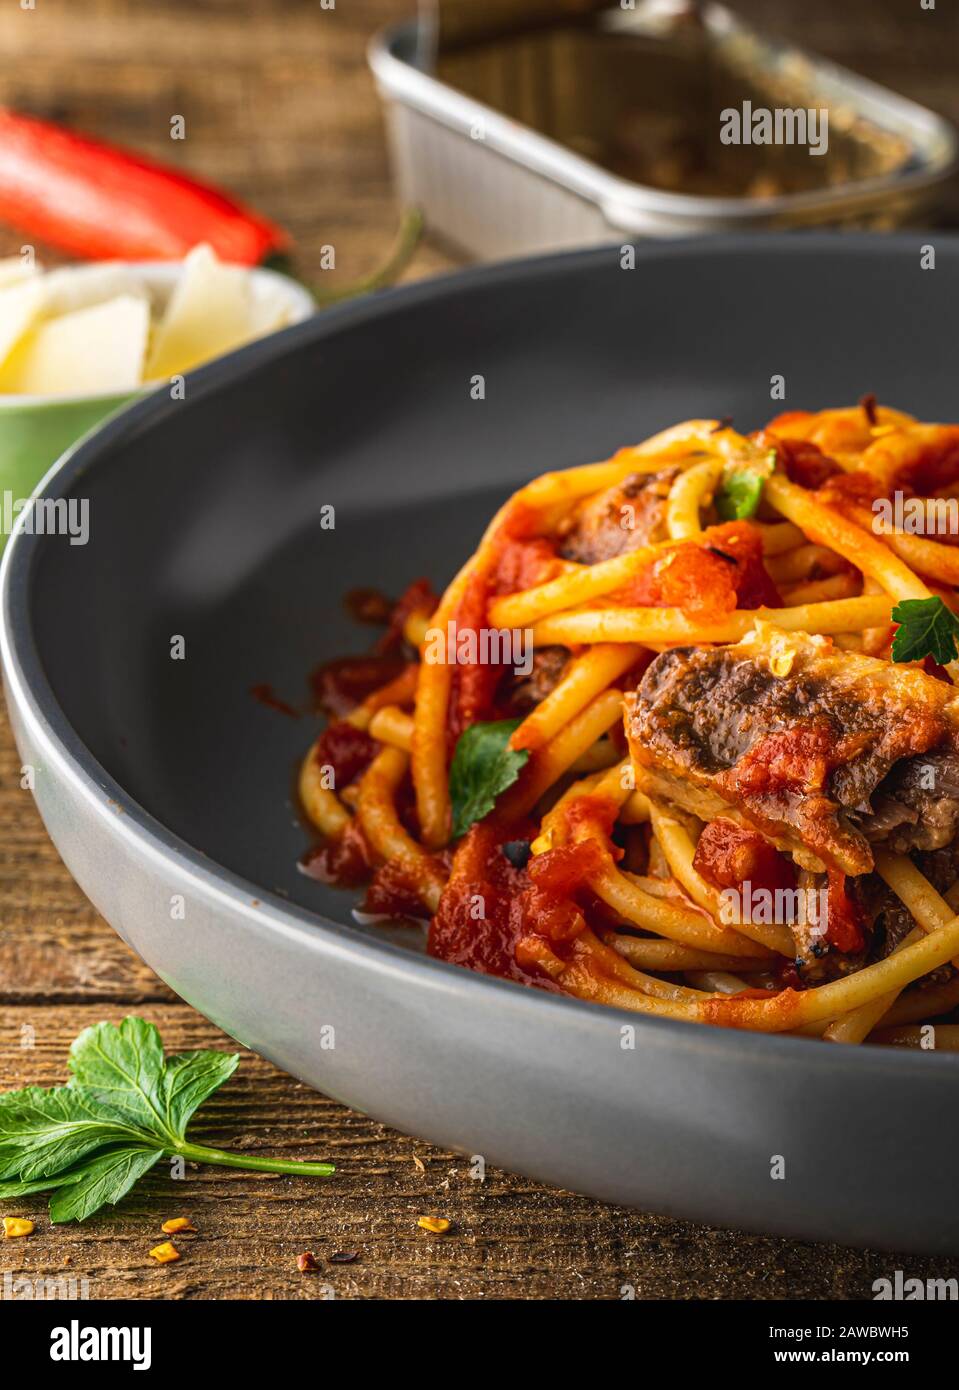 Pasta Bucatini con sardinas en salsa de tomate. Primer plano. Foto de stock